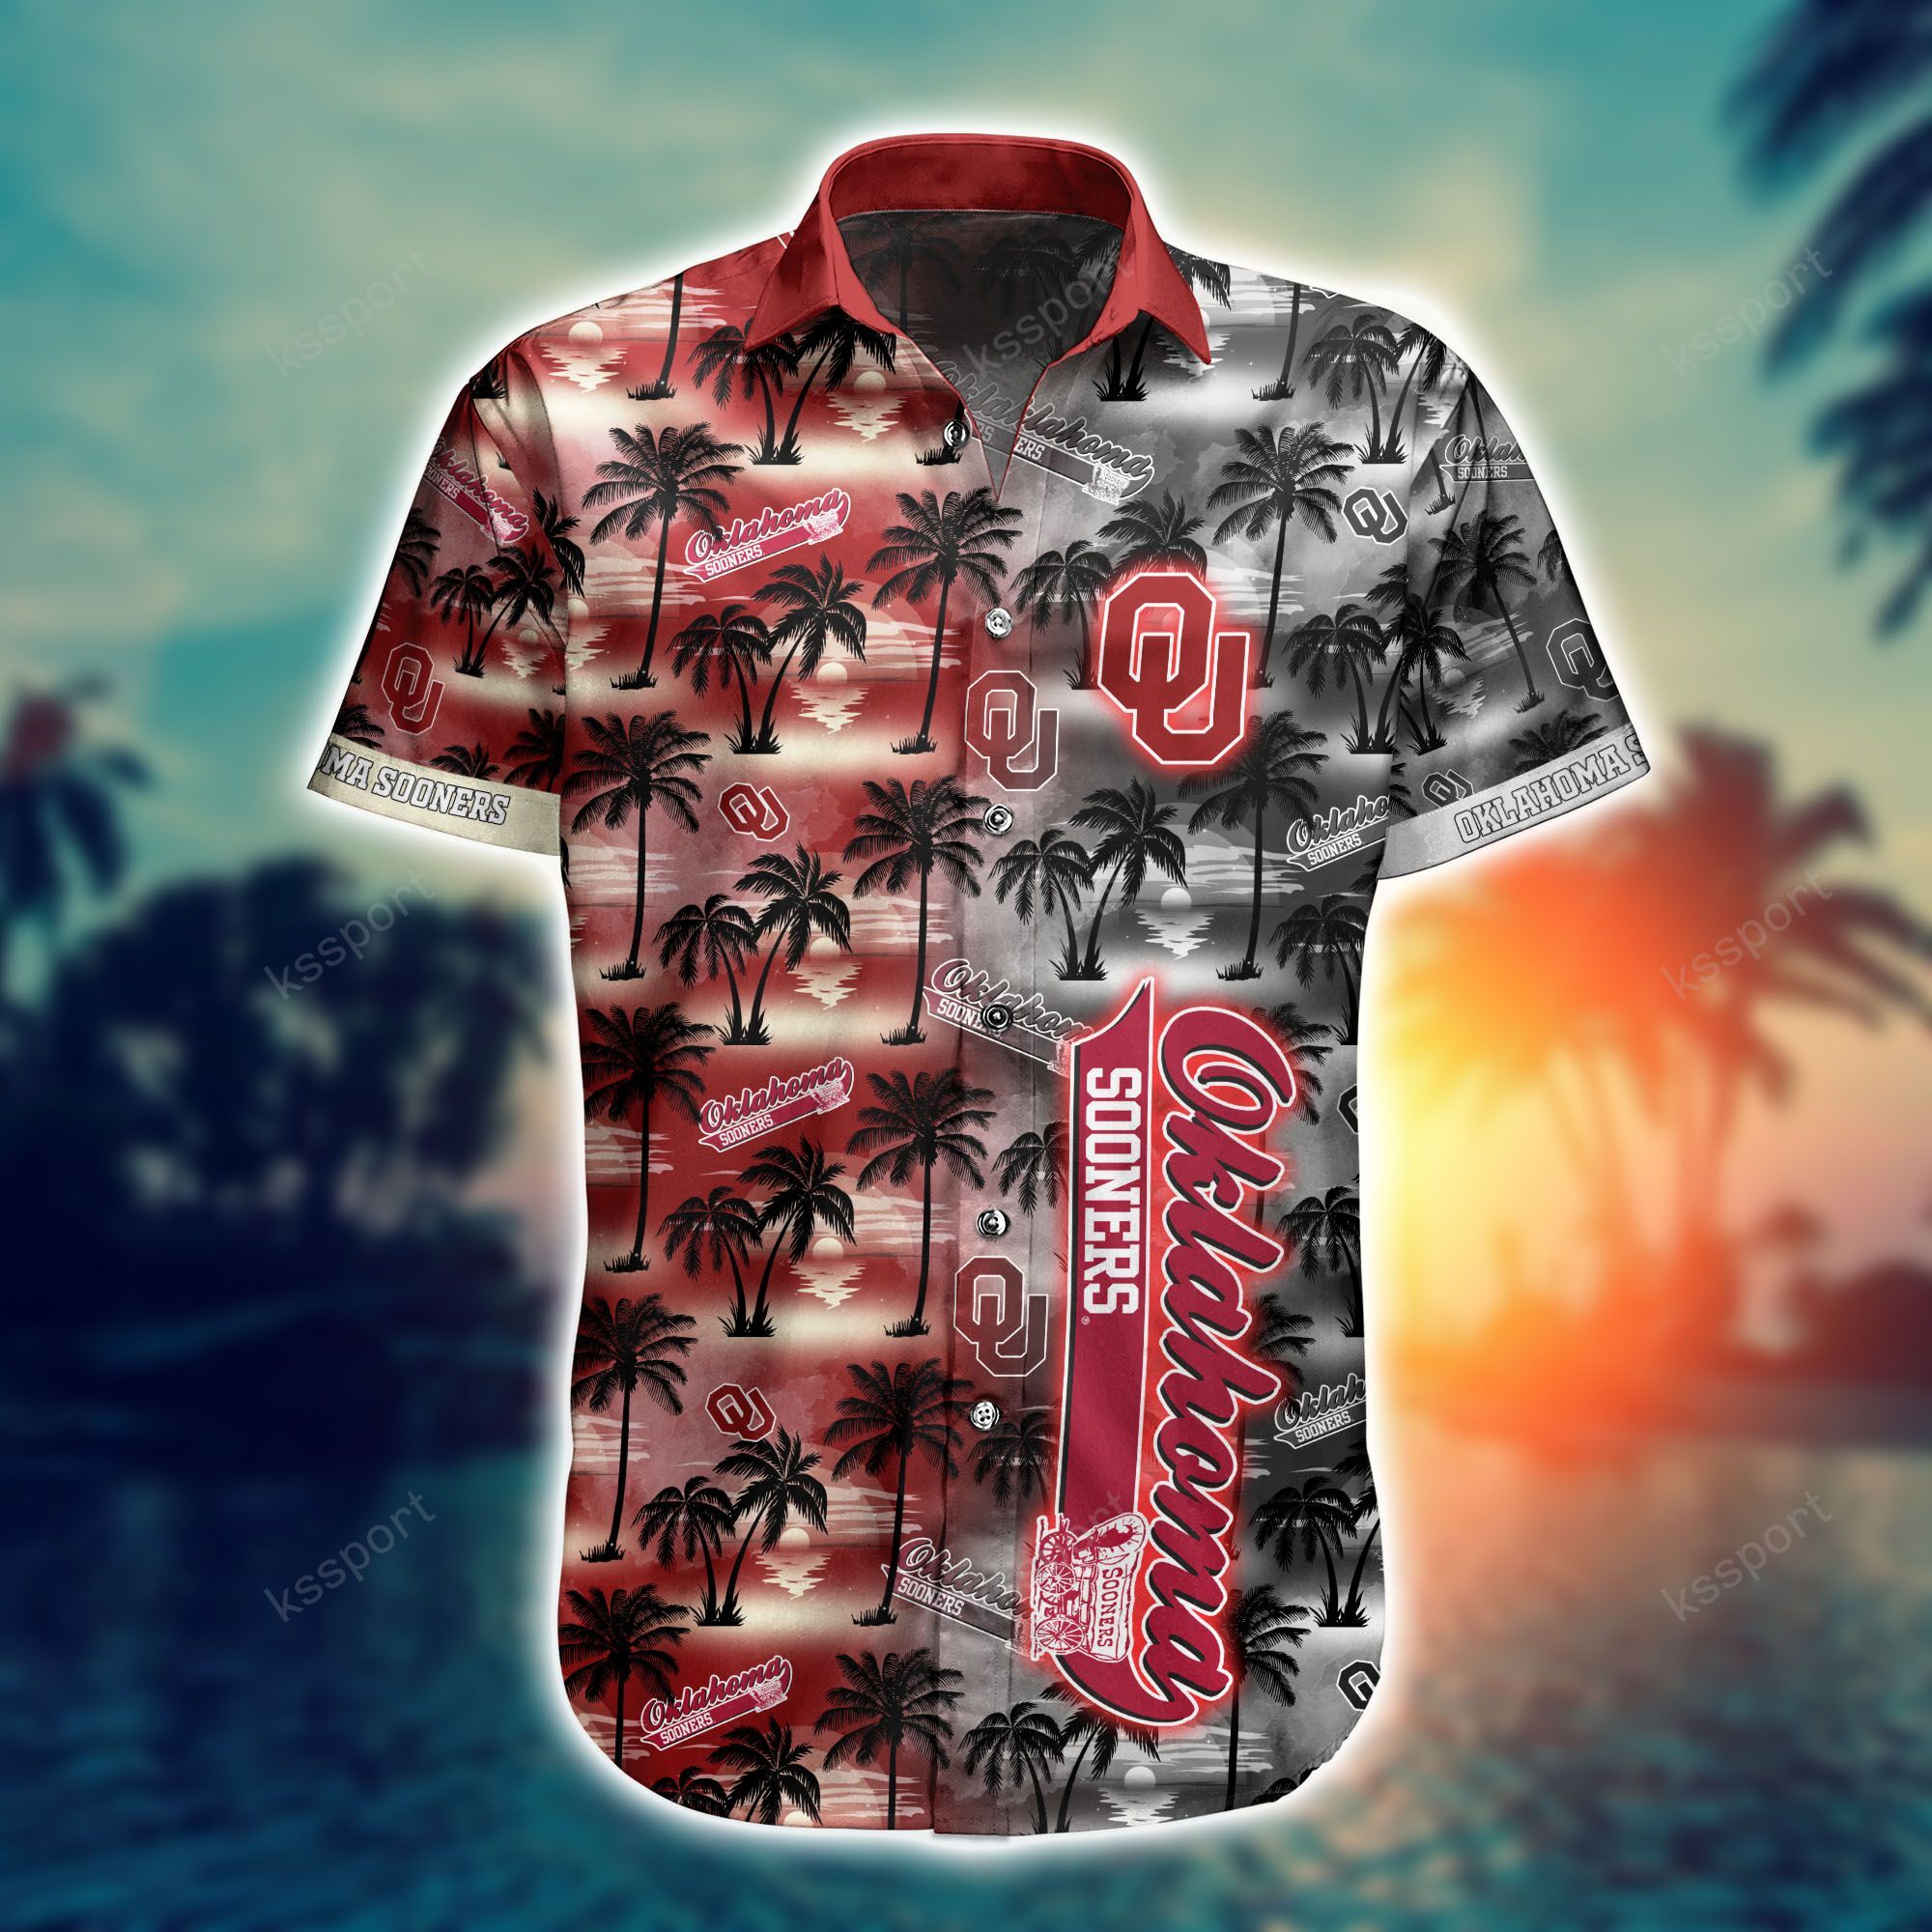 Hawaiian shirt and shorts is a great way to look stylish at a beach party 89